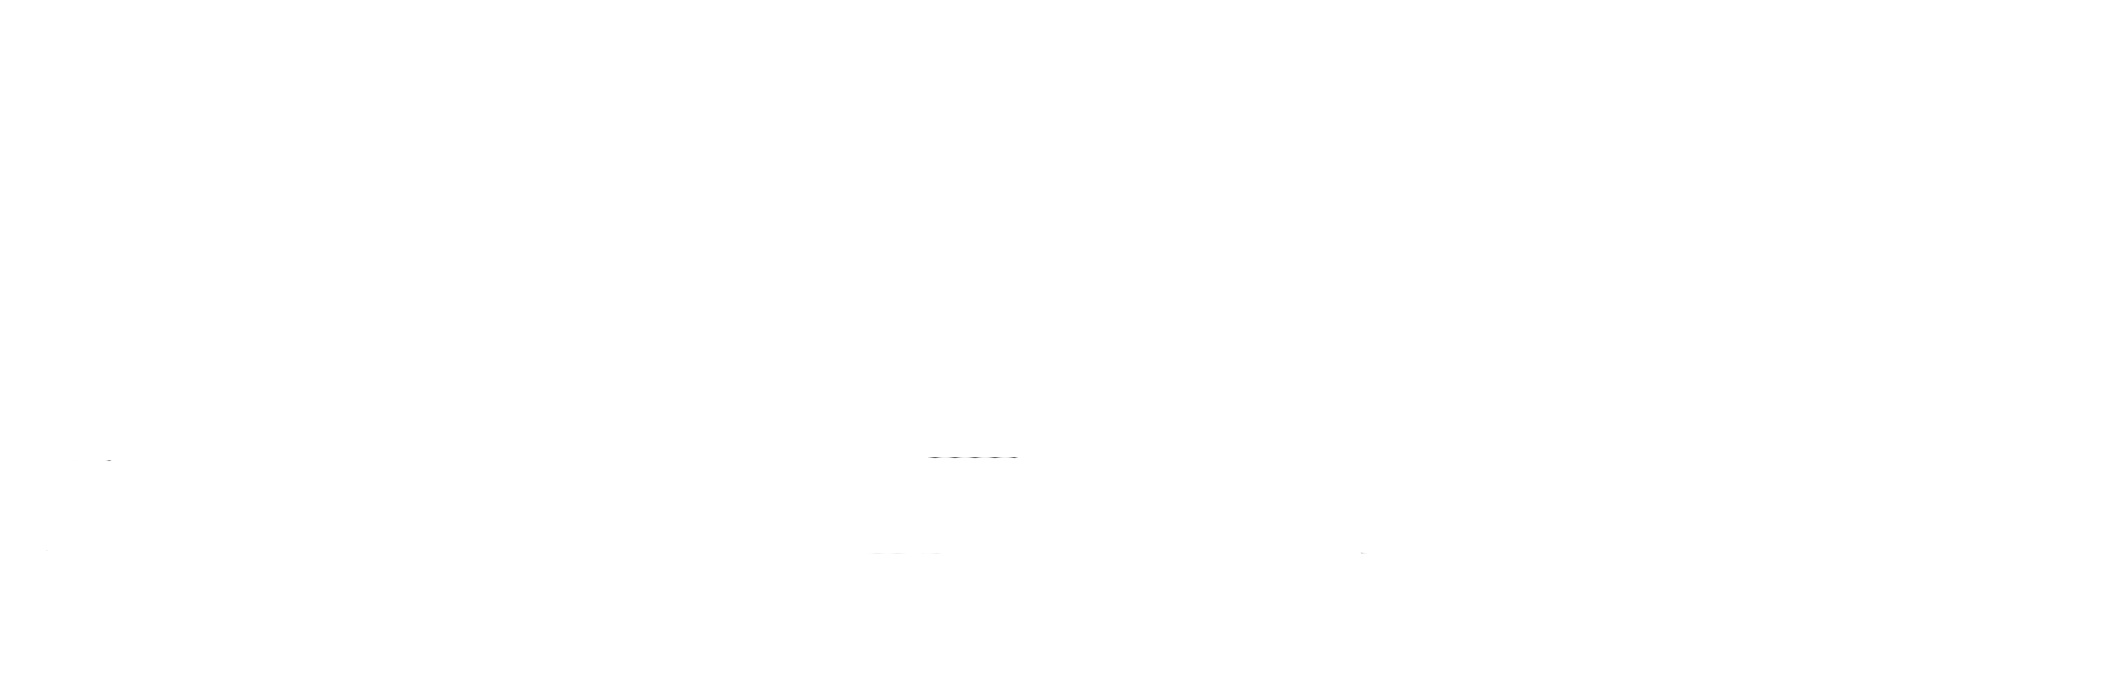 Iron Elegance Security Doors